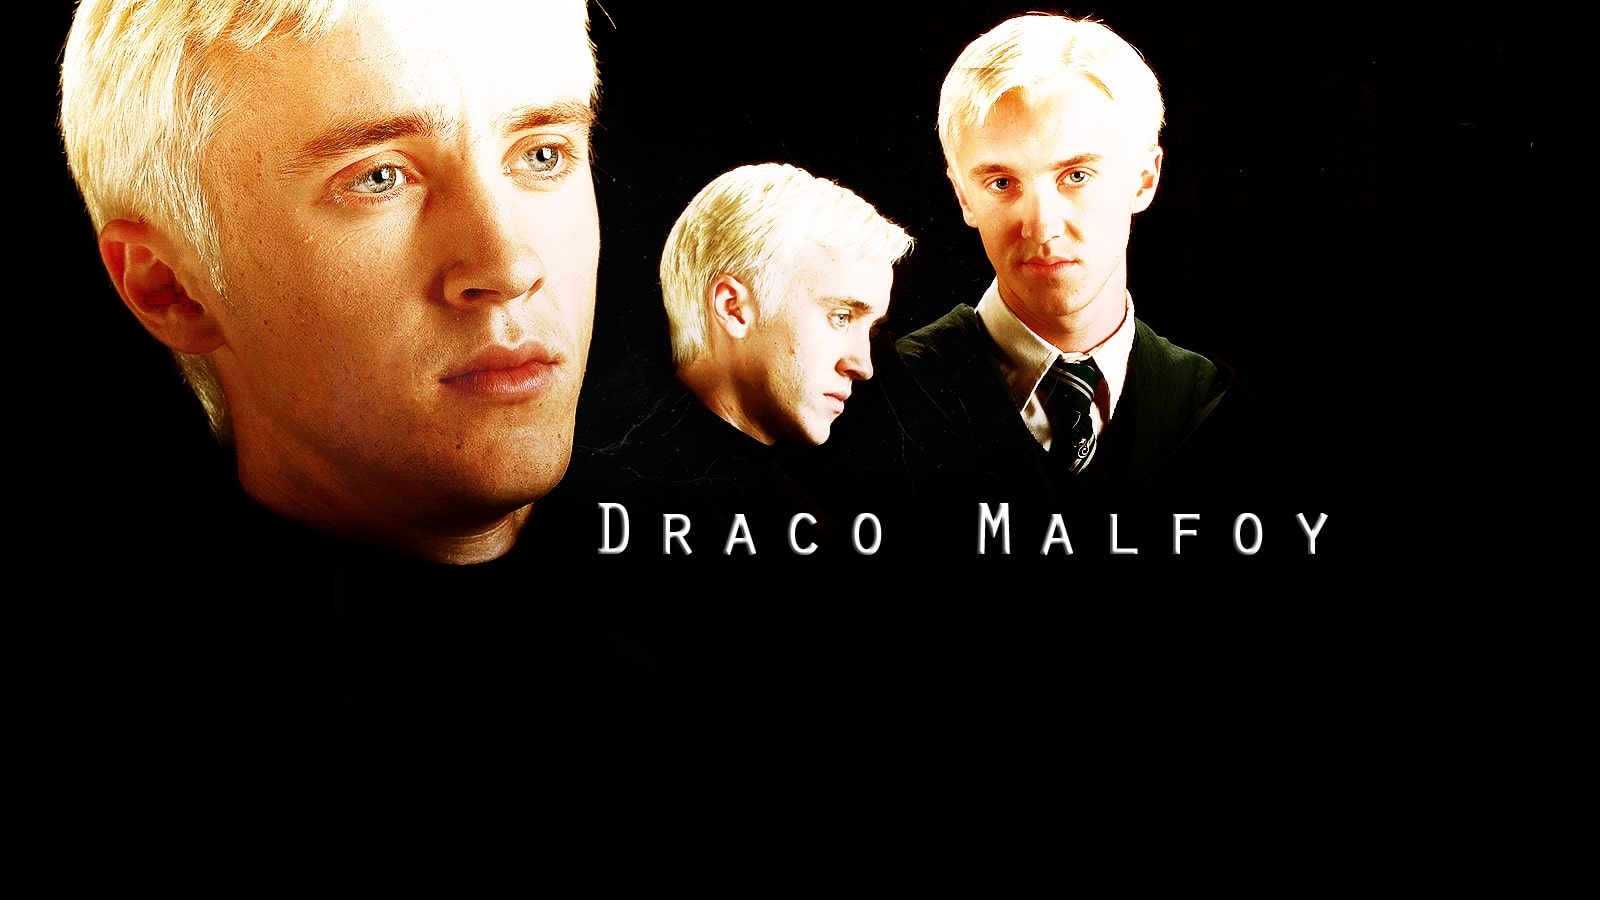 Draco Malfoy PC Wallpaper - KoLPaPer - Awesome Free HD Wallpapers